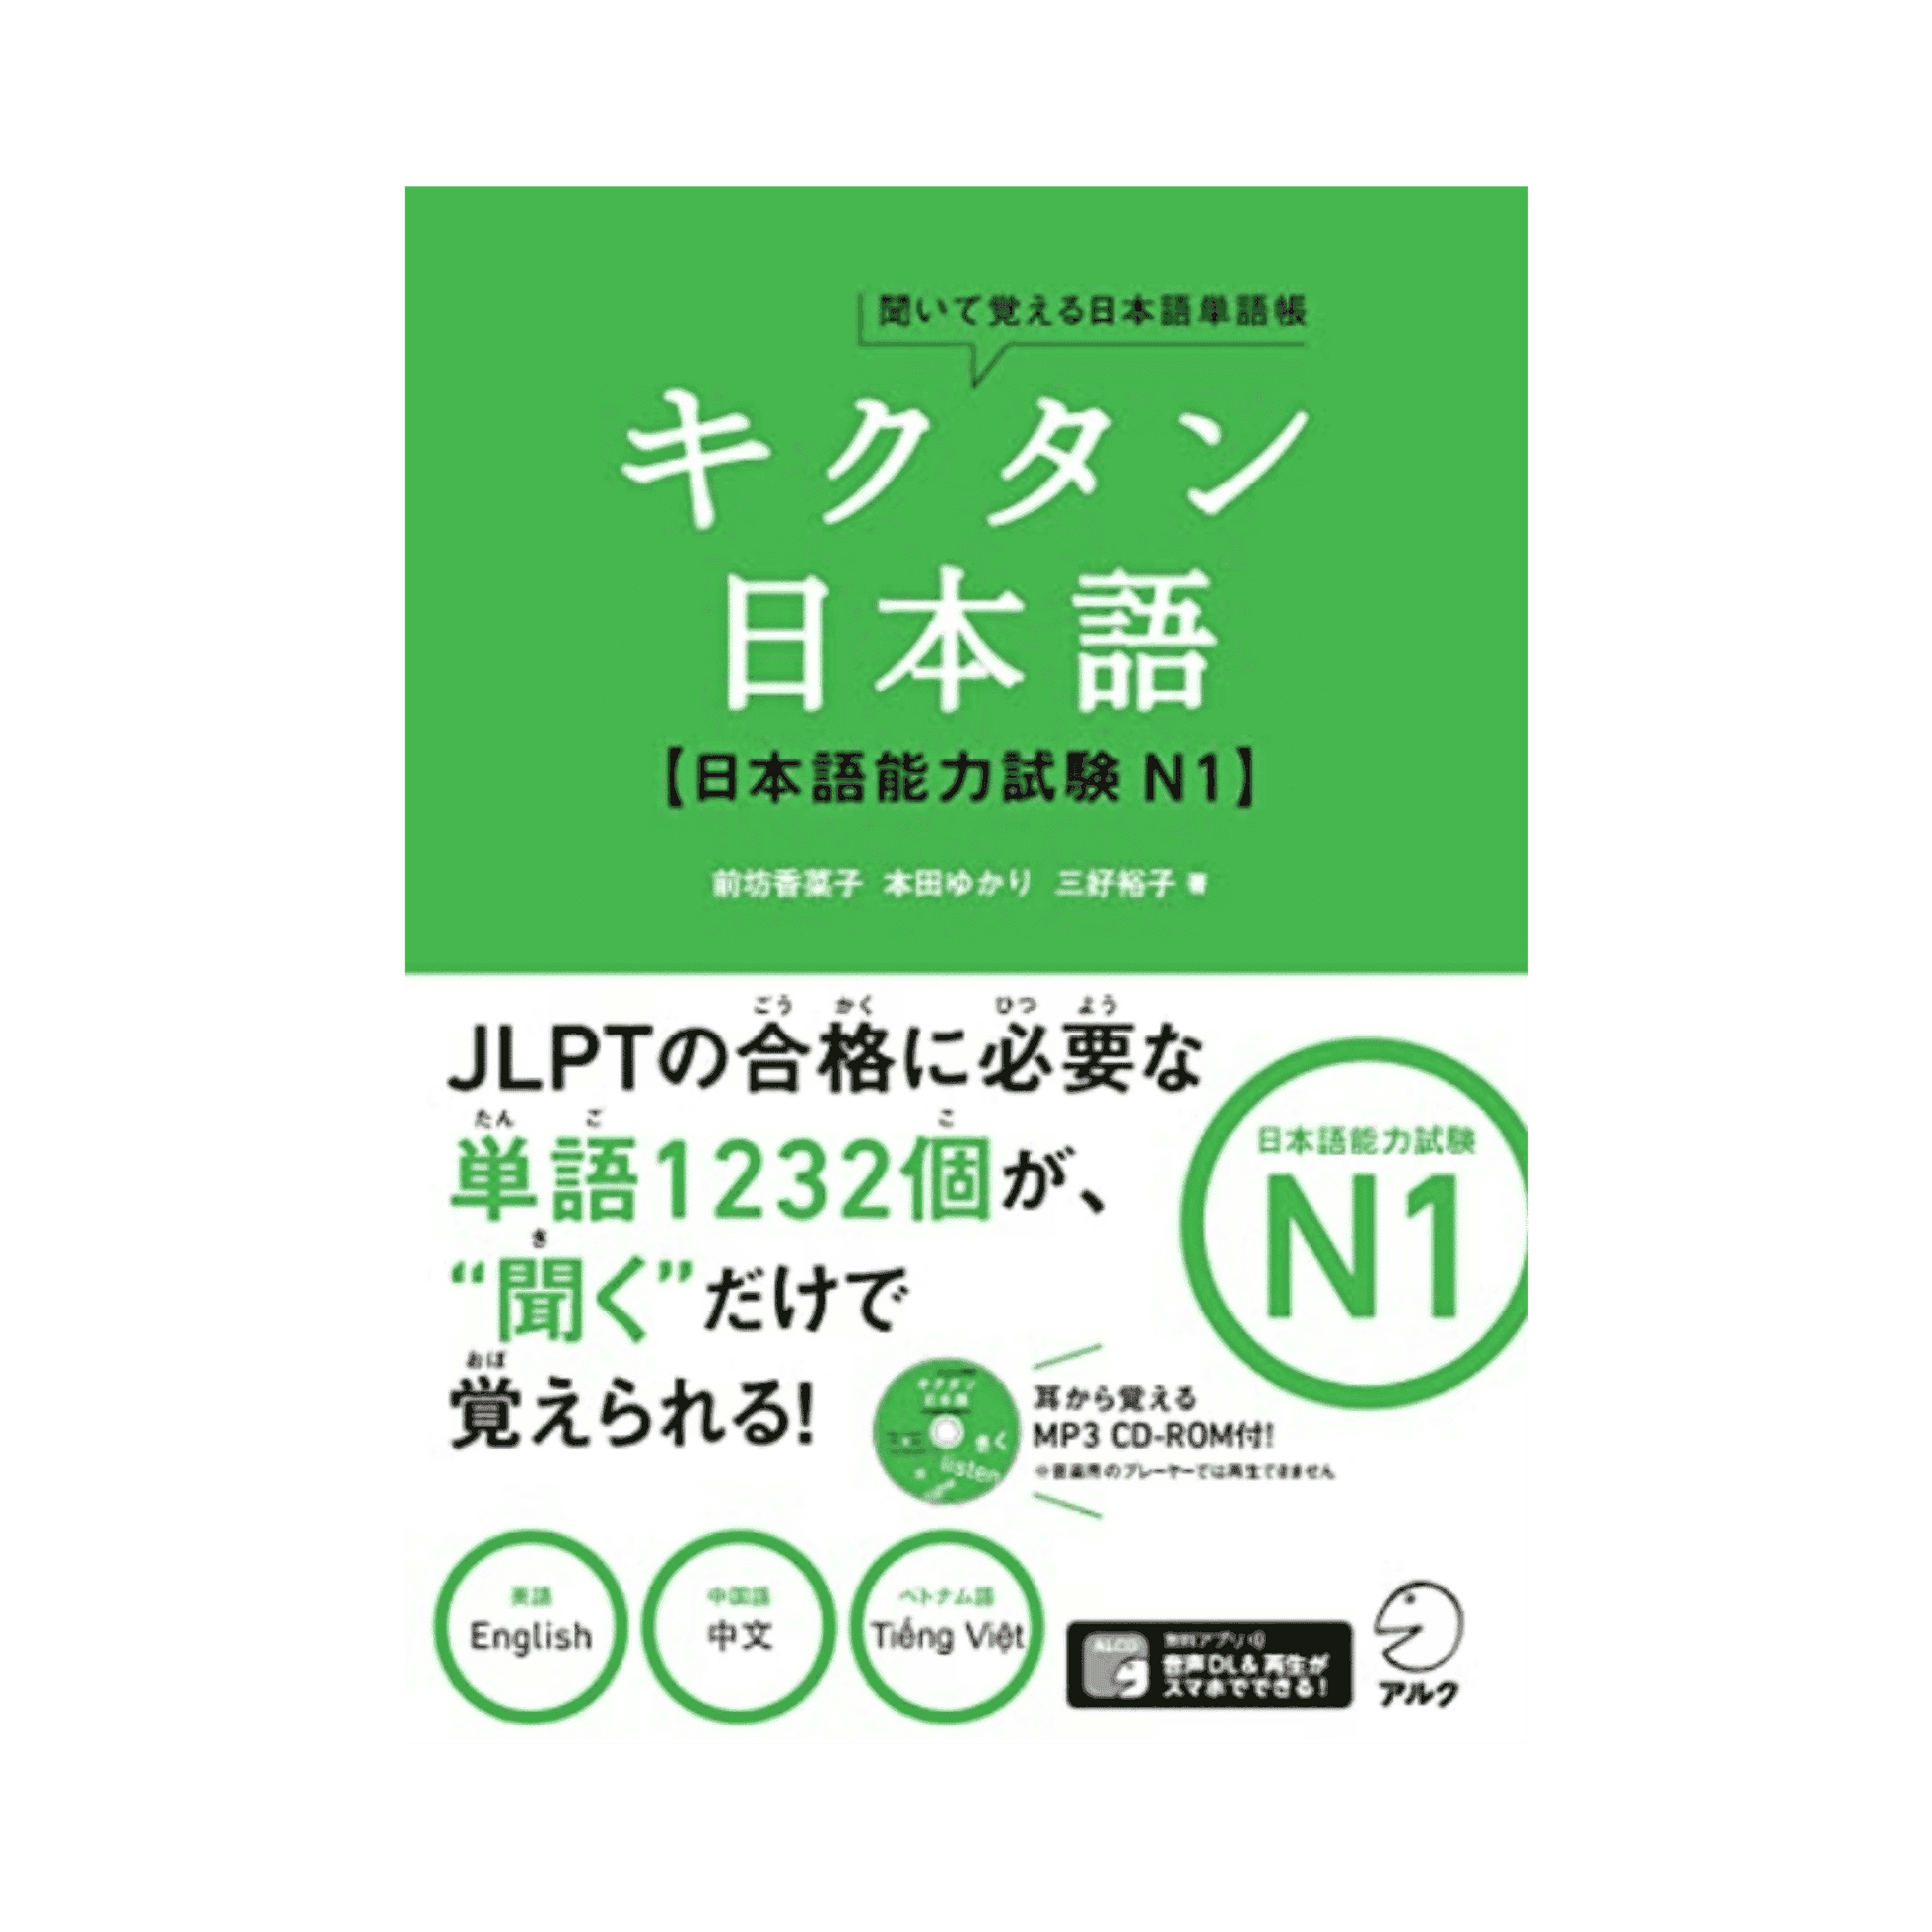 Manuel de japonais : KIKUTAN Nihongo ChitoroShop